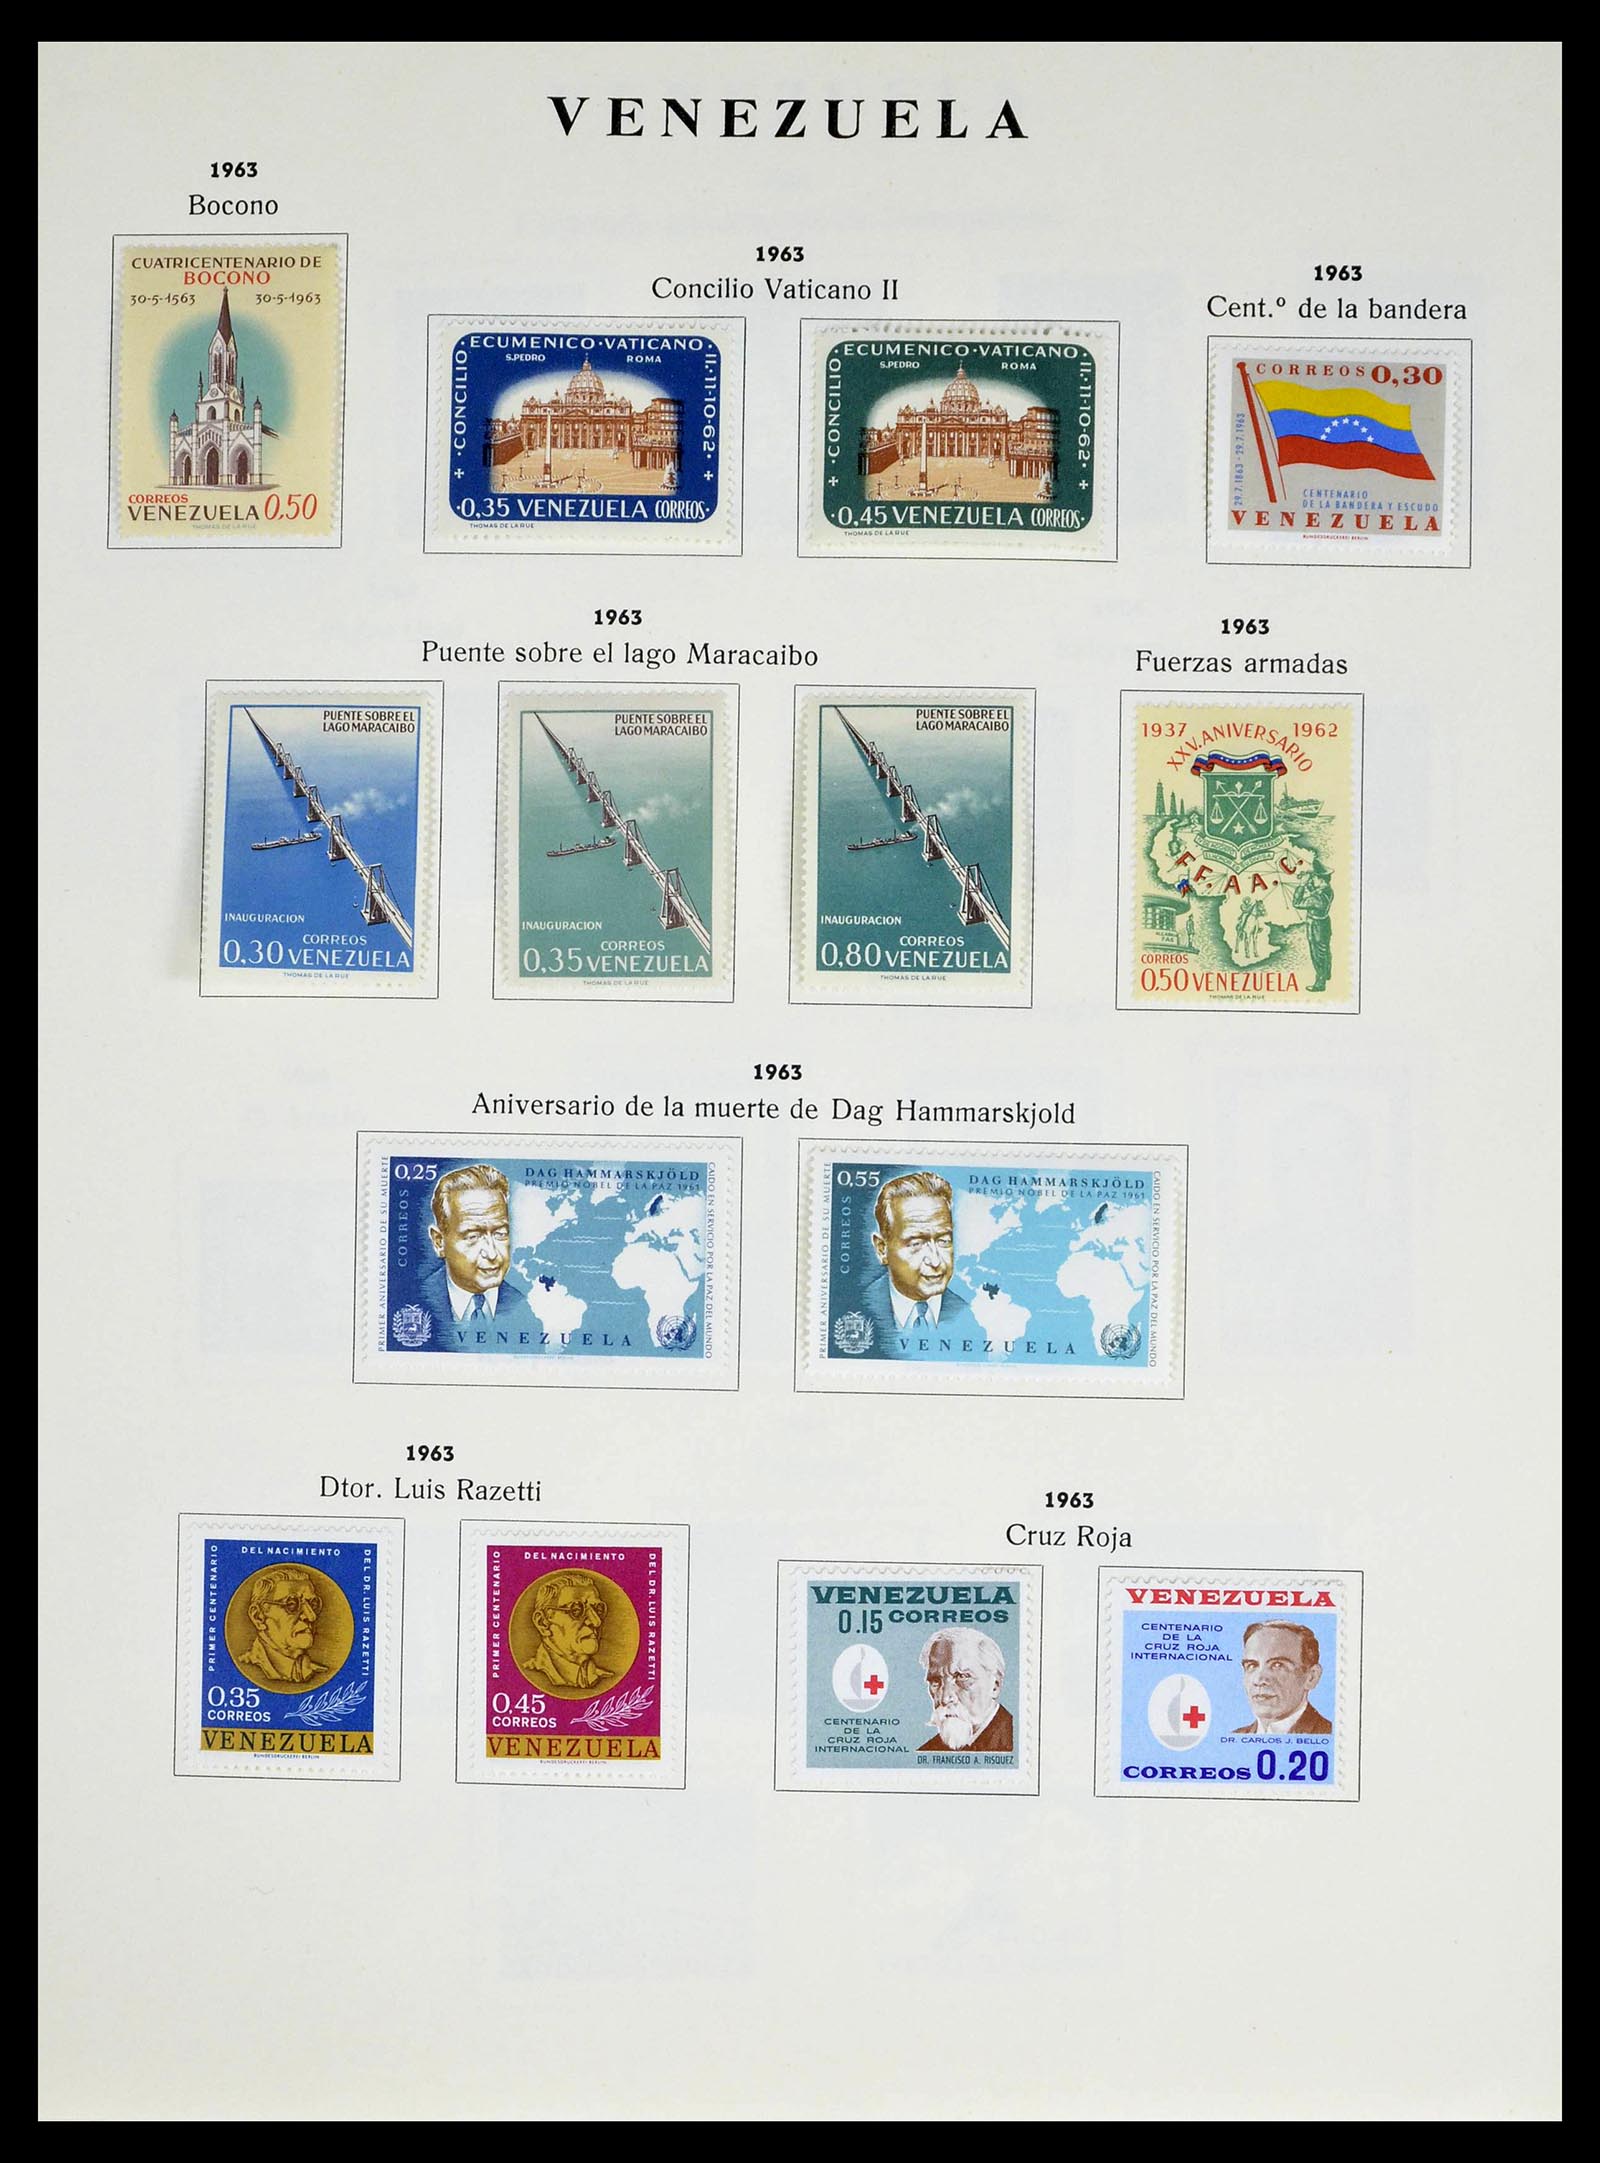 39223 0048 - Stamp collection 39223 Venezuela 1859-1984.